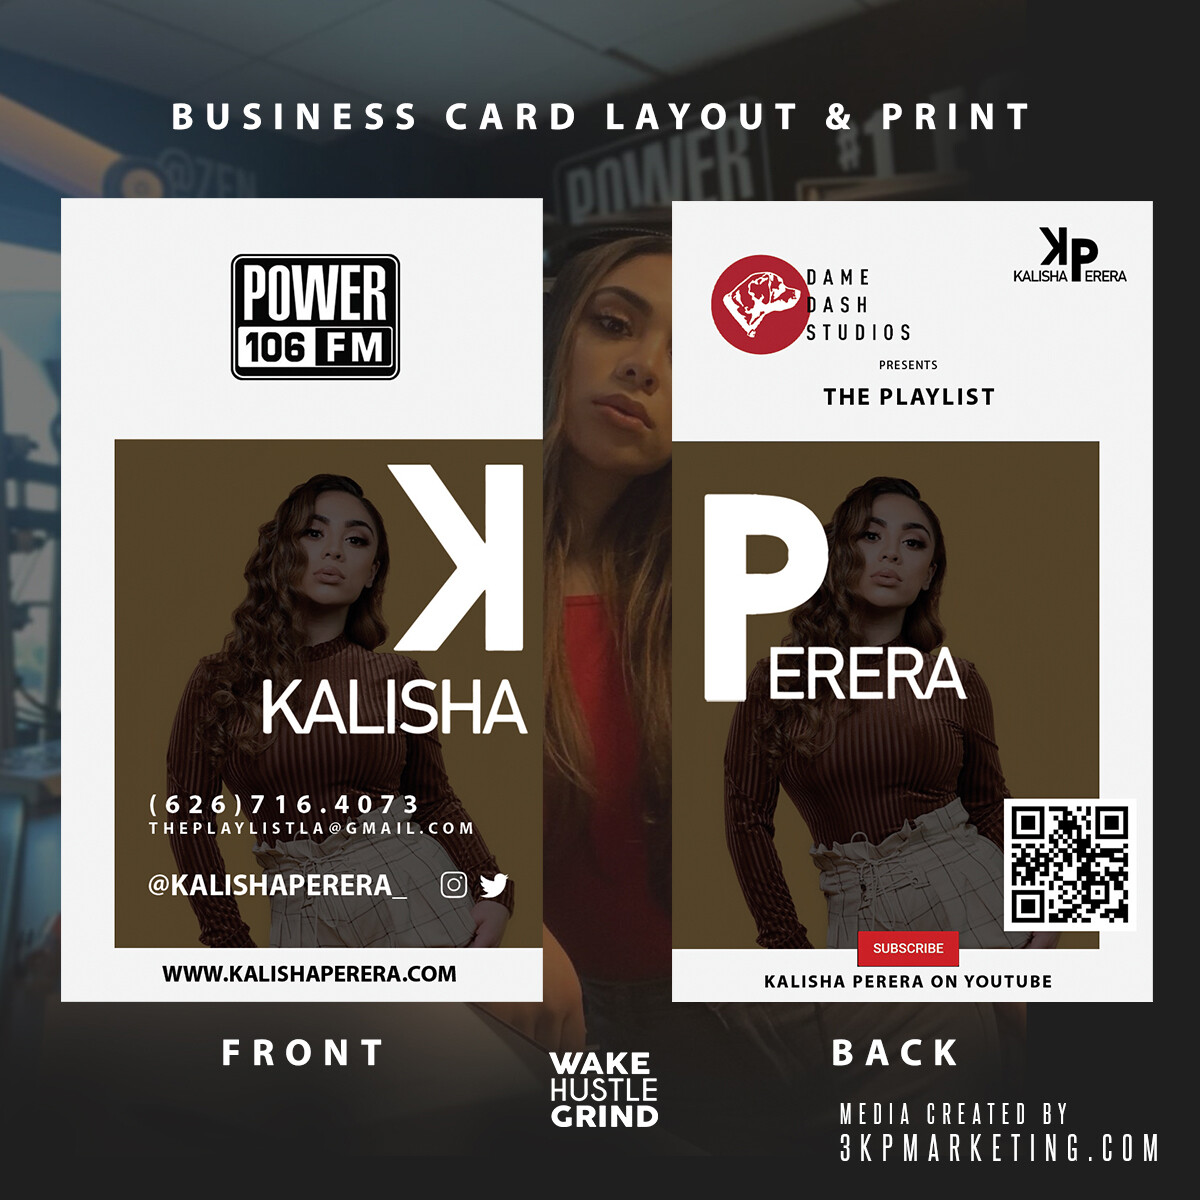 Print + Design 1000 Business Cards 16pt Gloss